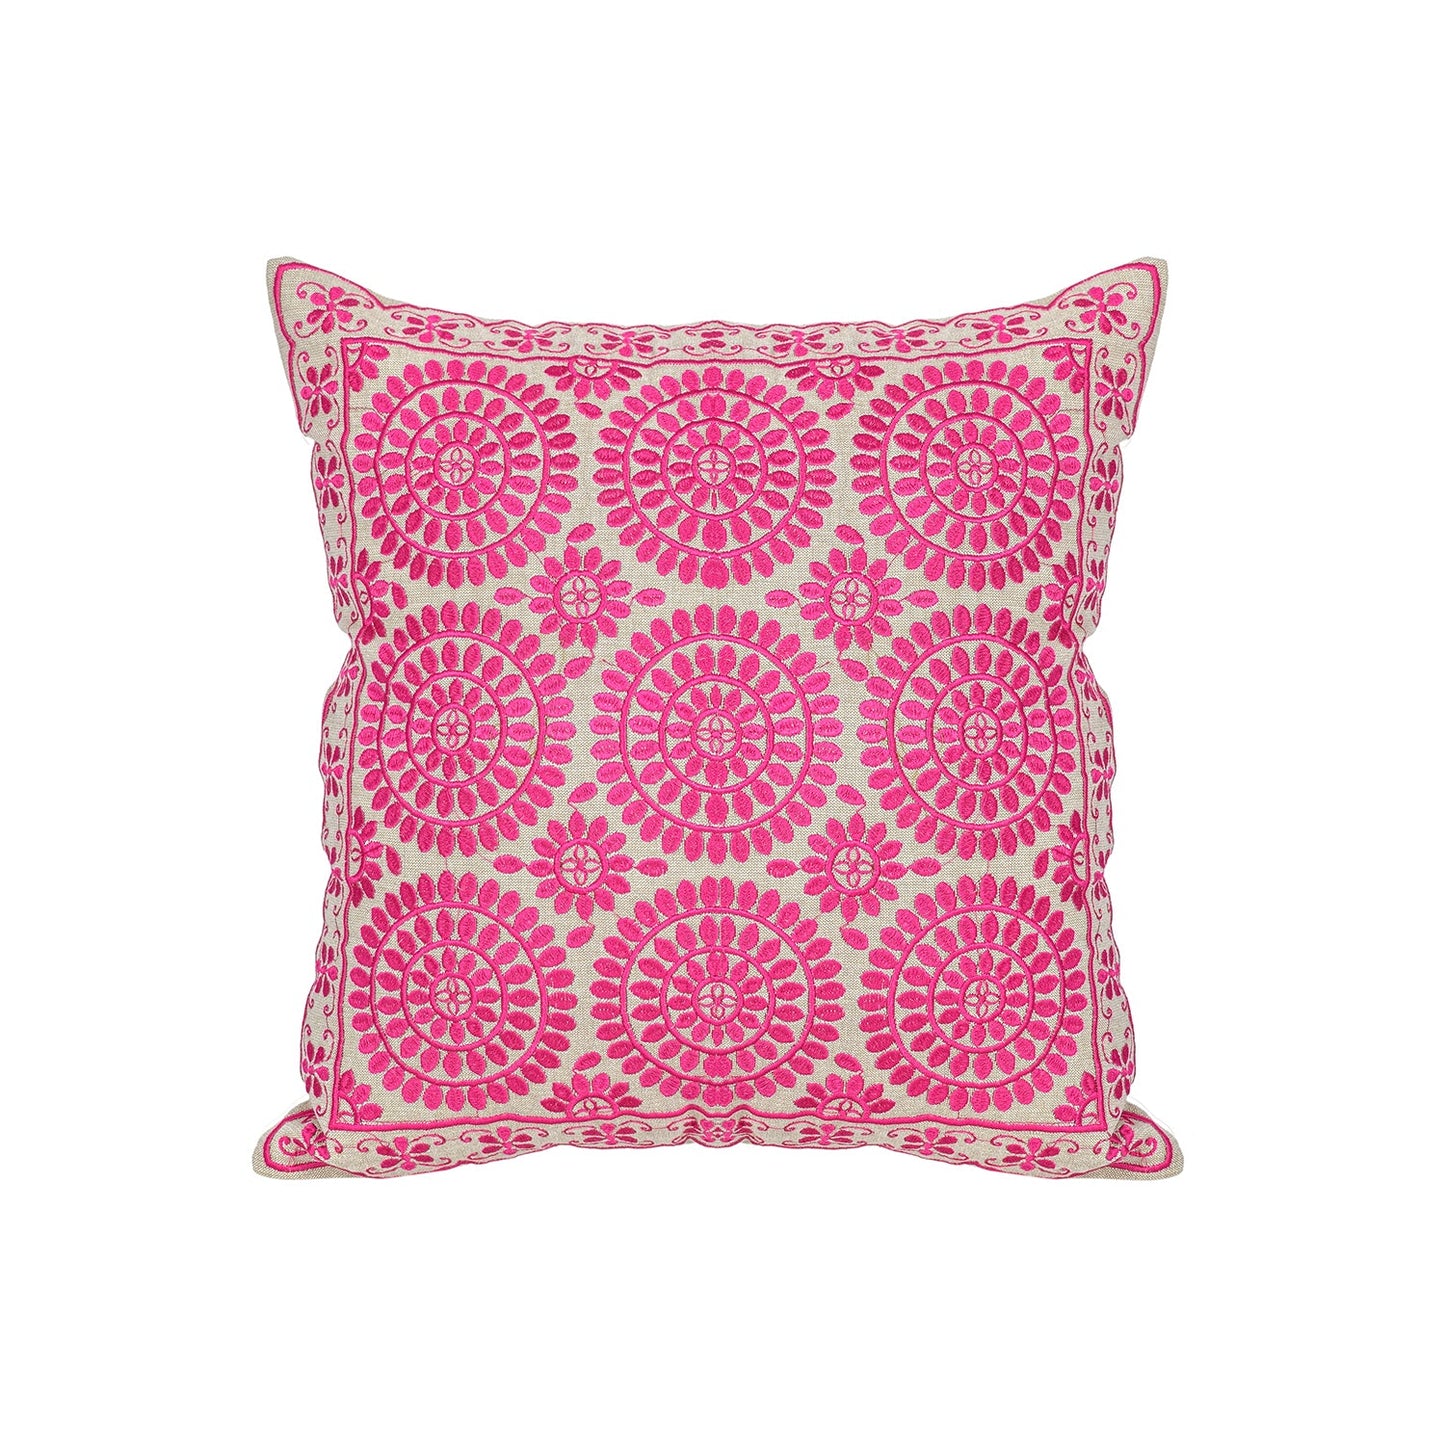 Pink Geometric Jaipur Throw Pillow Cover - I